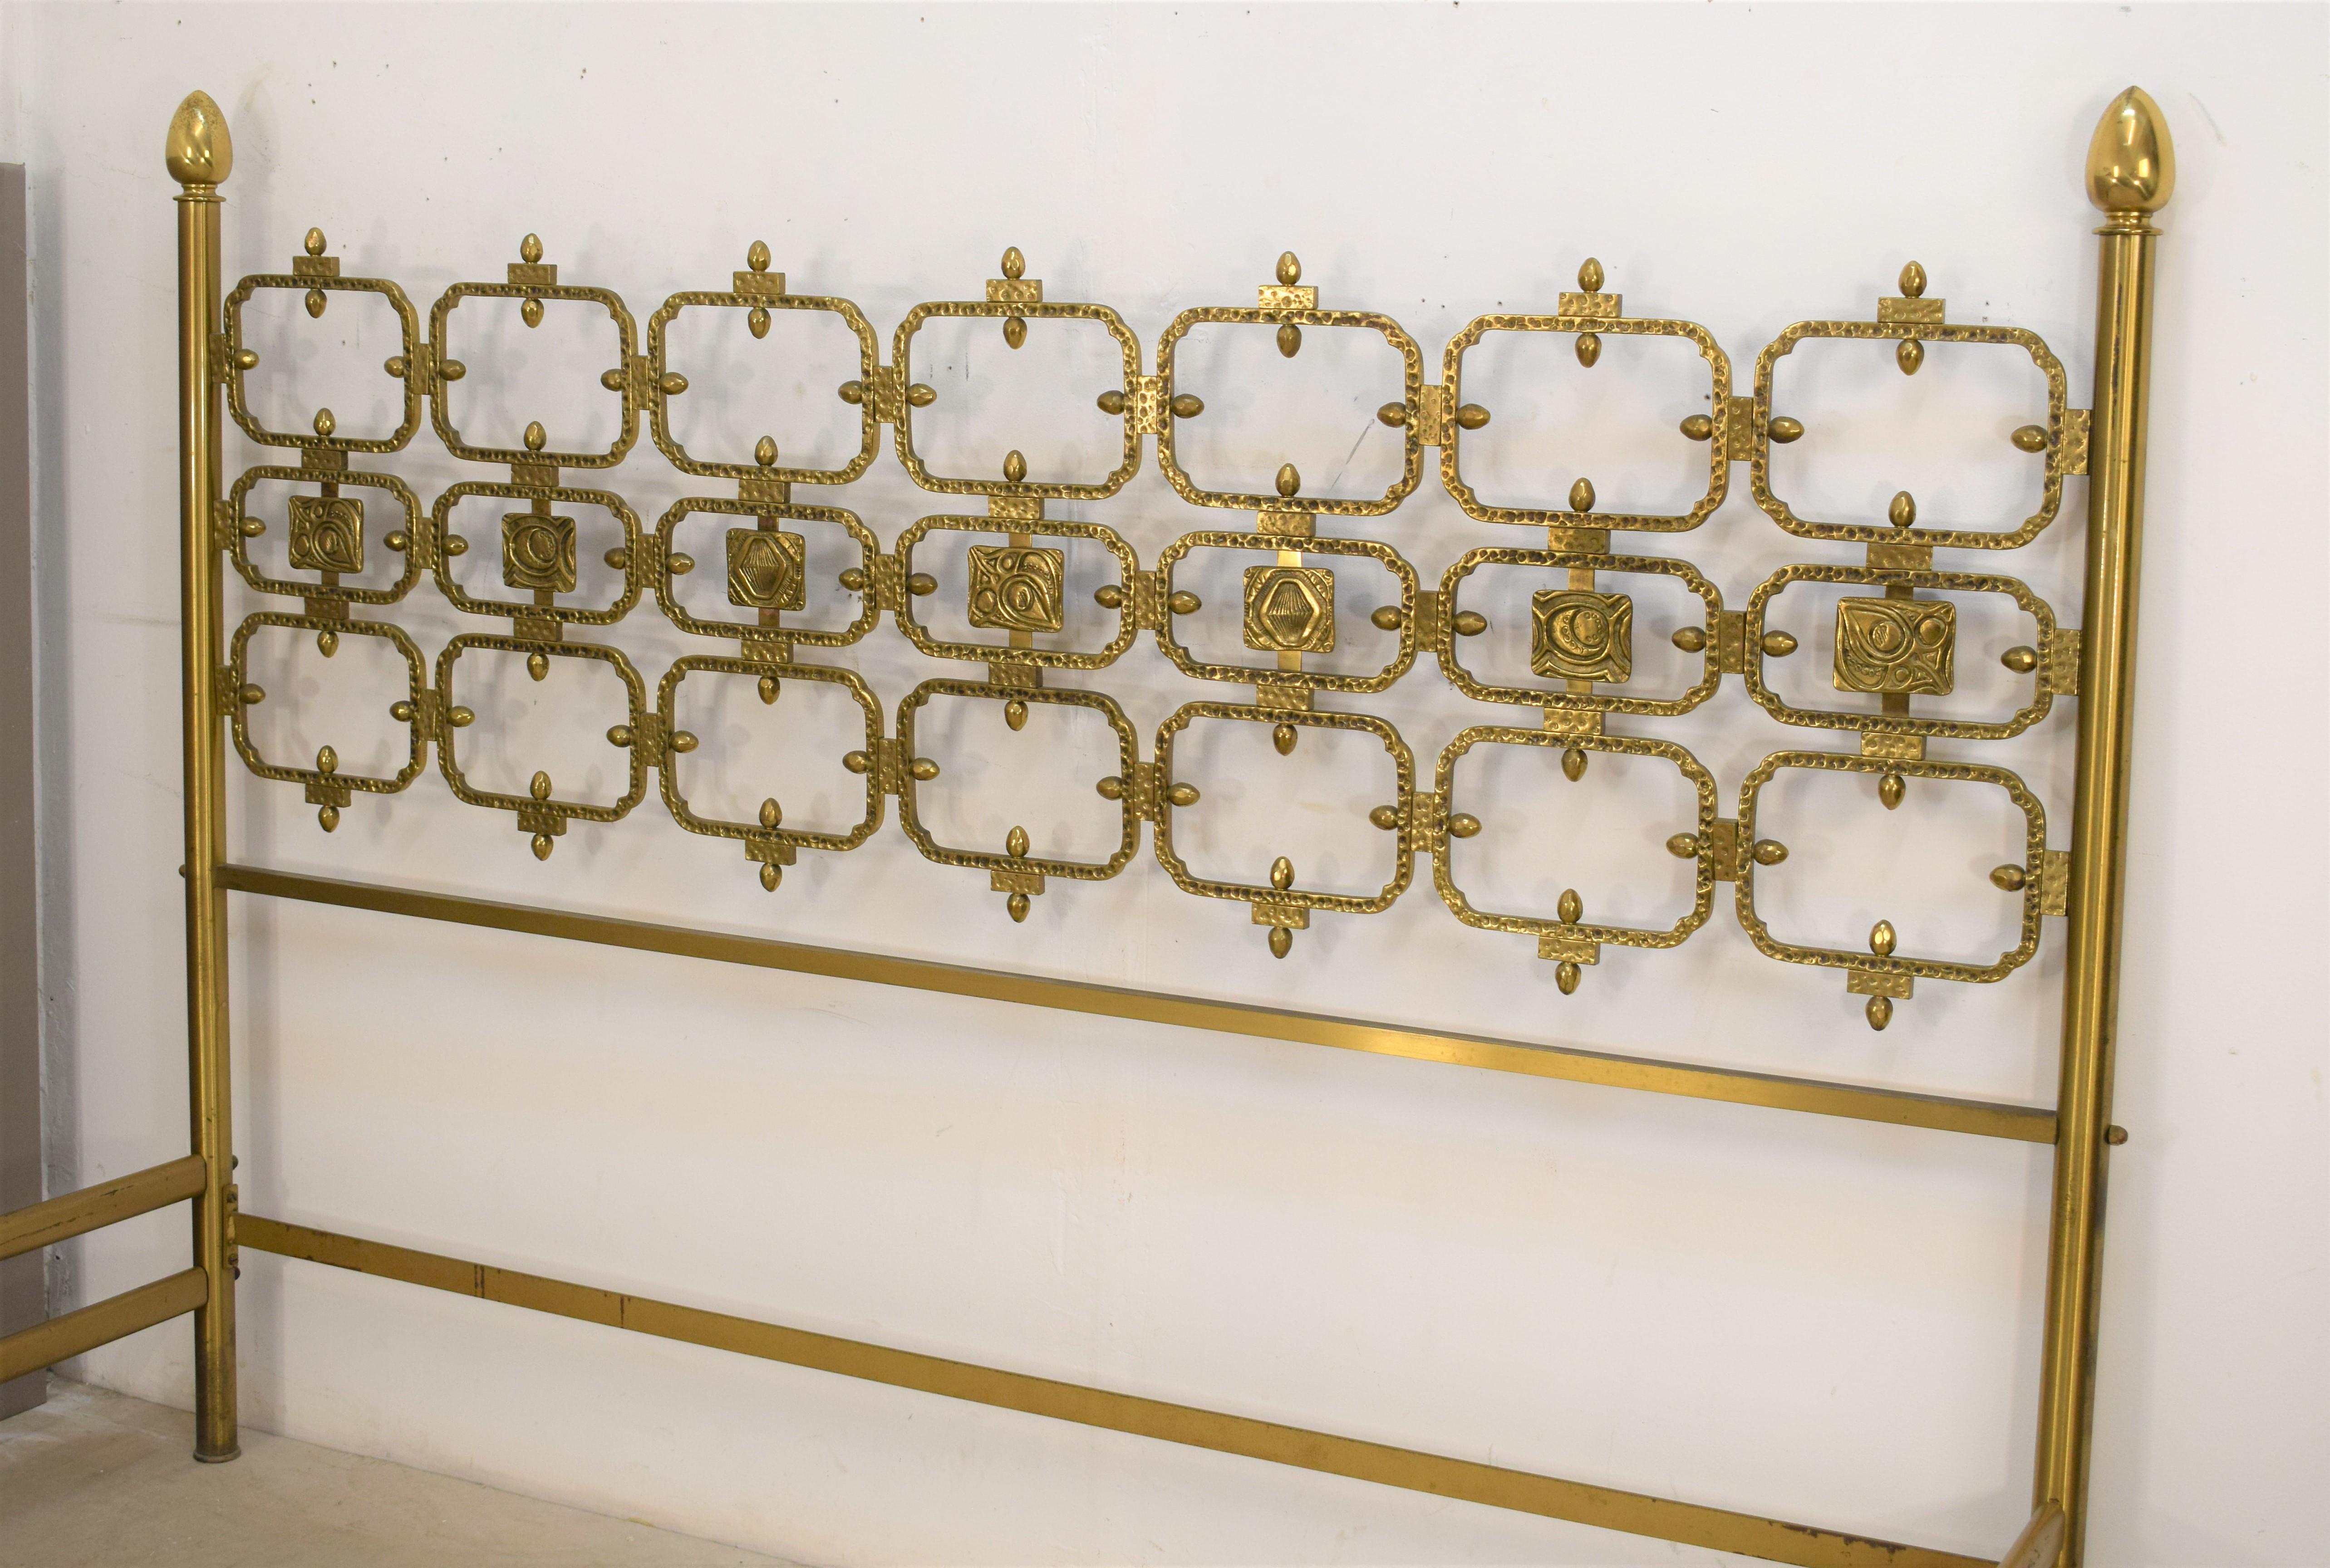 Osvaldo Borsani brass double bed, 1960s.
Dimensions: H= 128 cm; W=175 cm; D=205 cm; Seat Height = 32 cm.